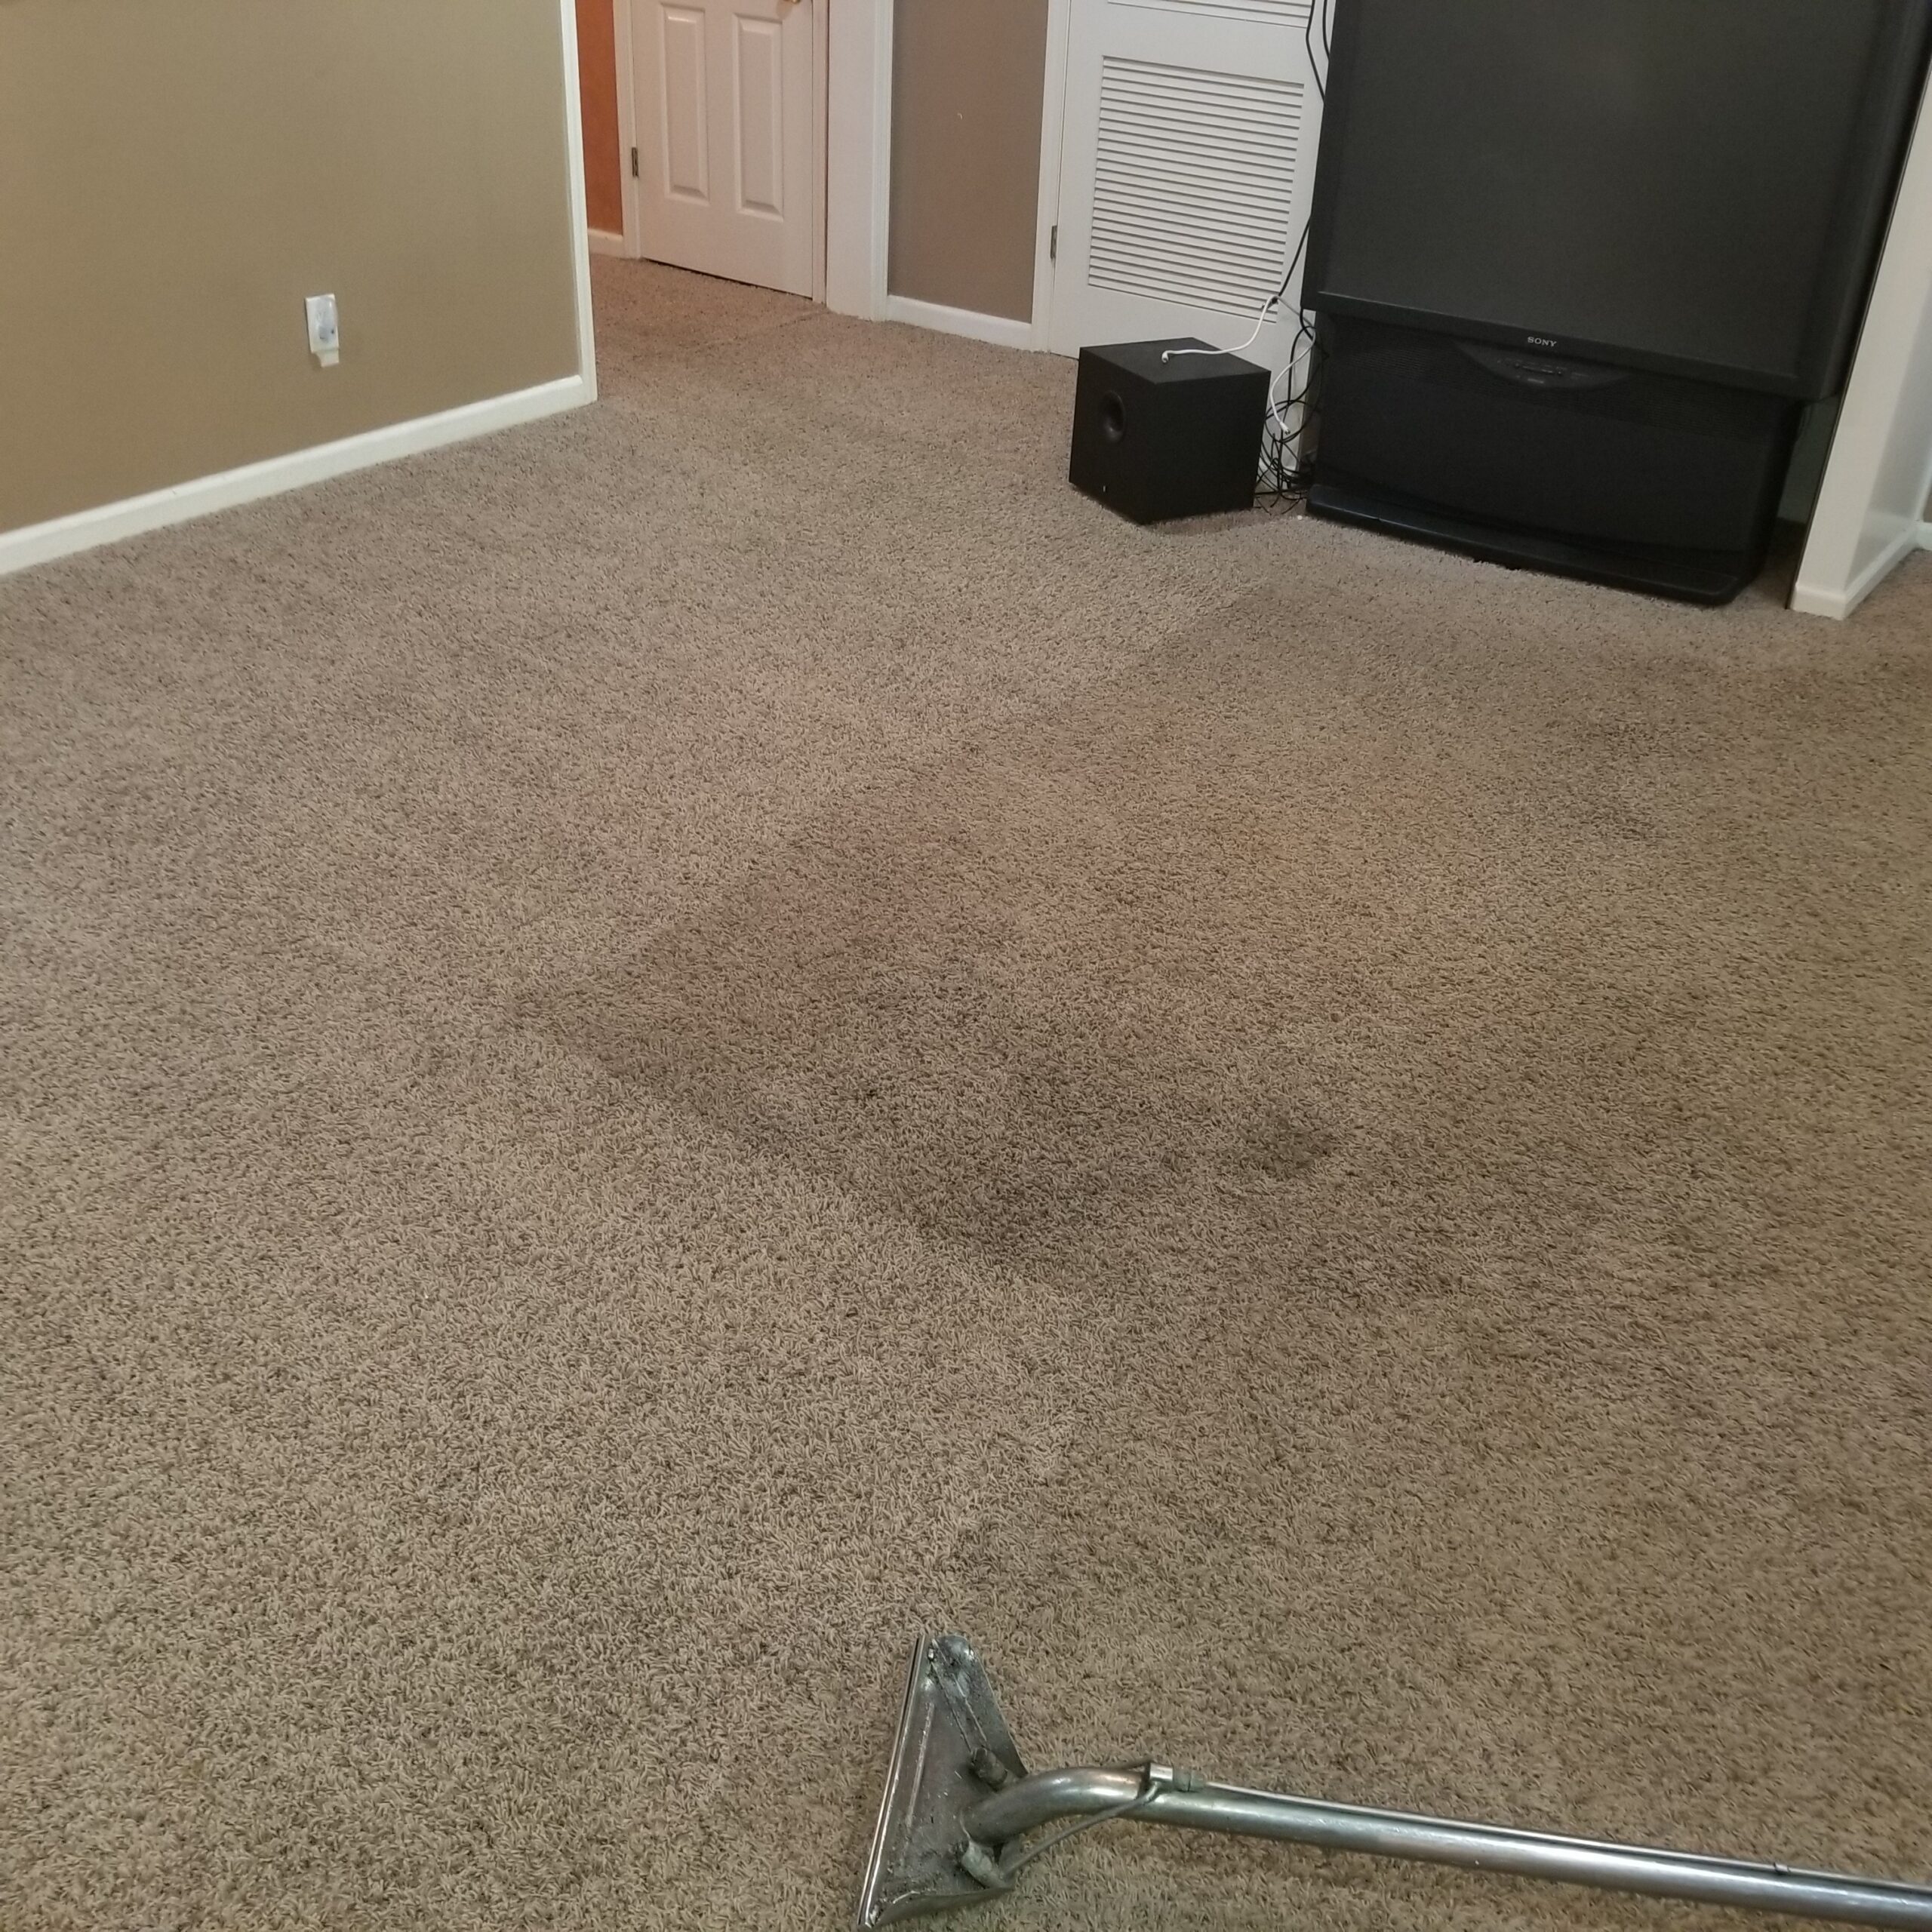 Hire Carpet Cleaner